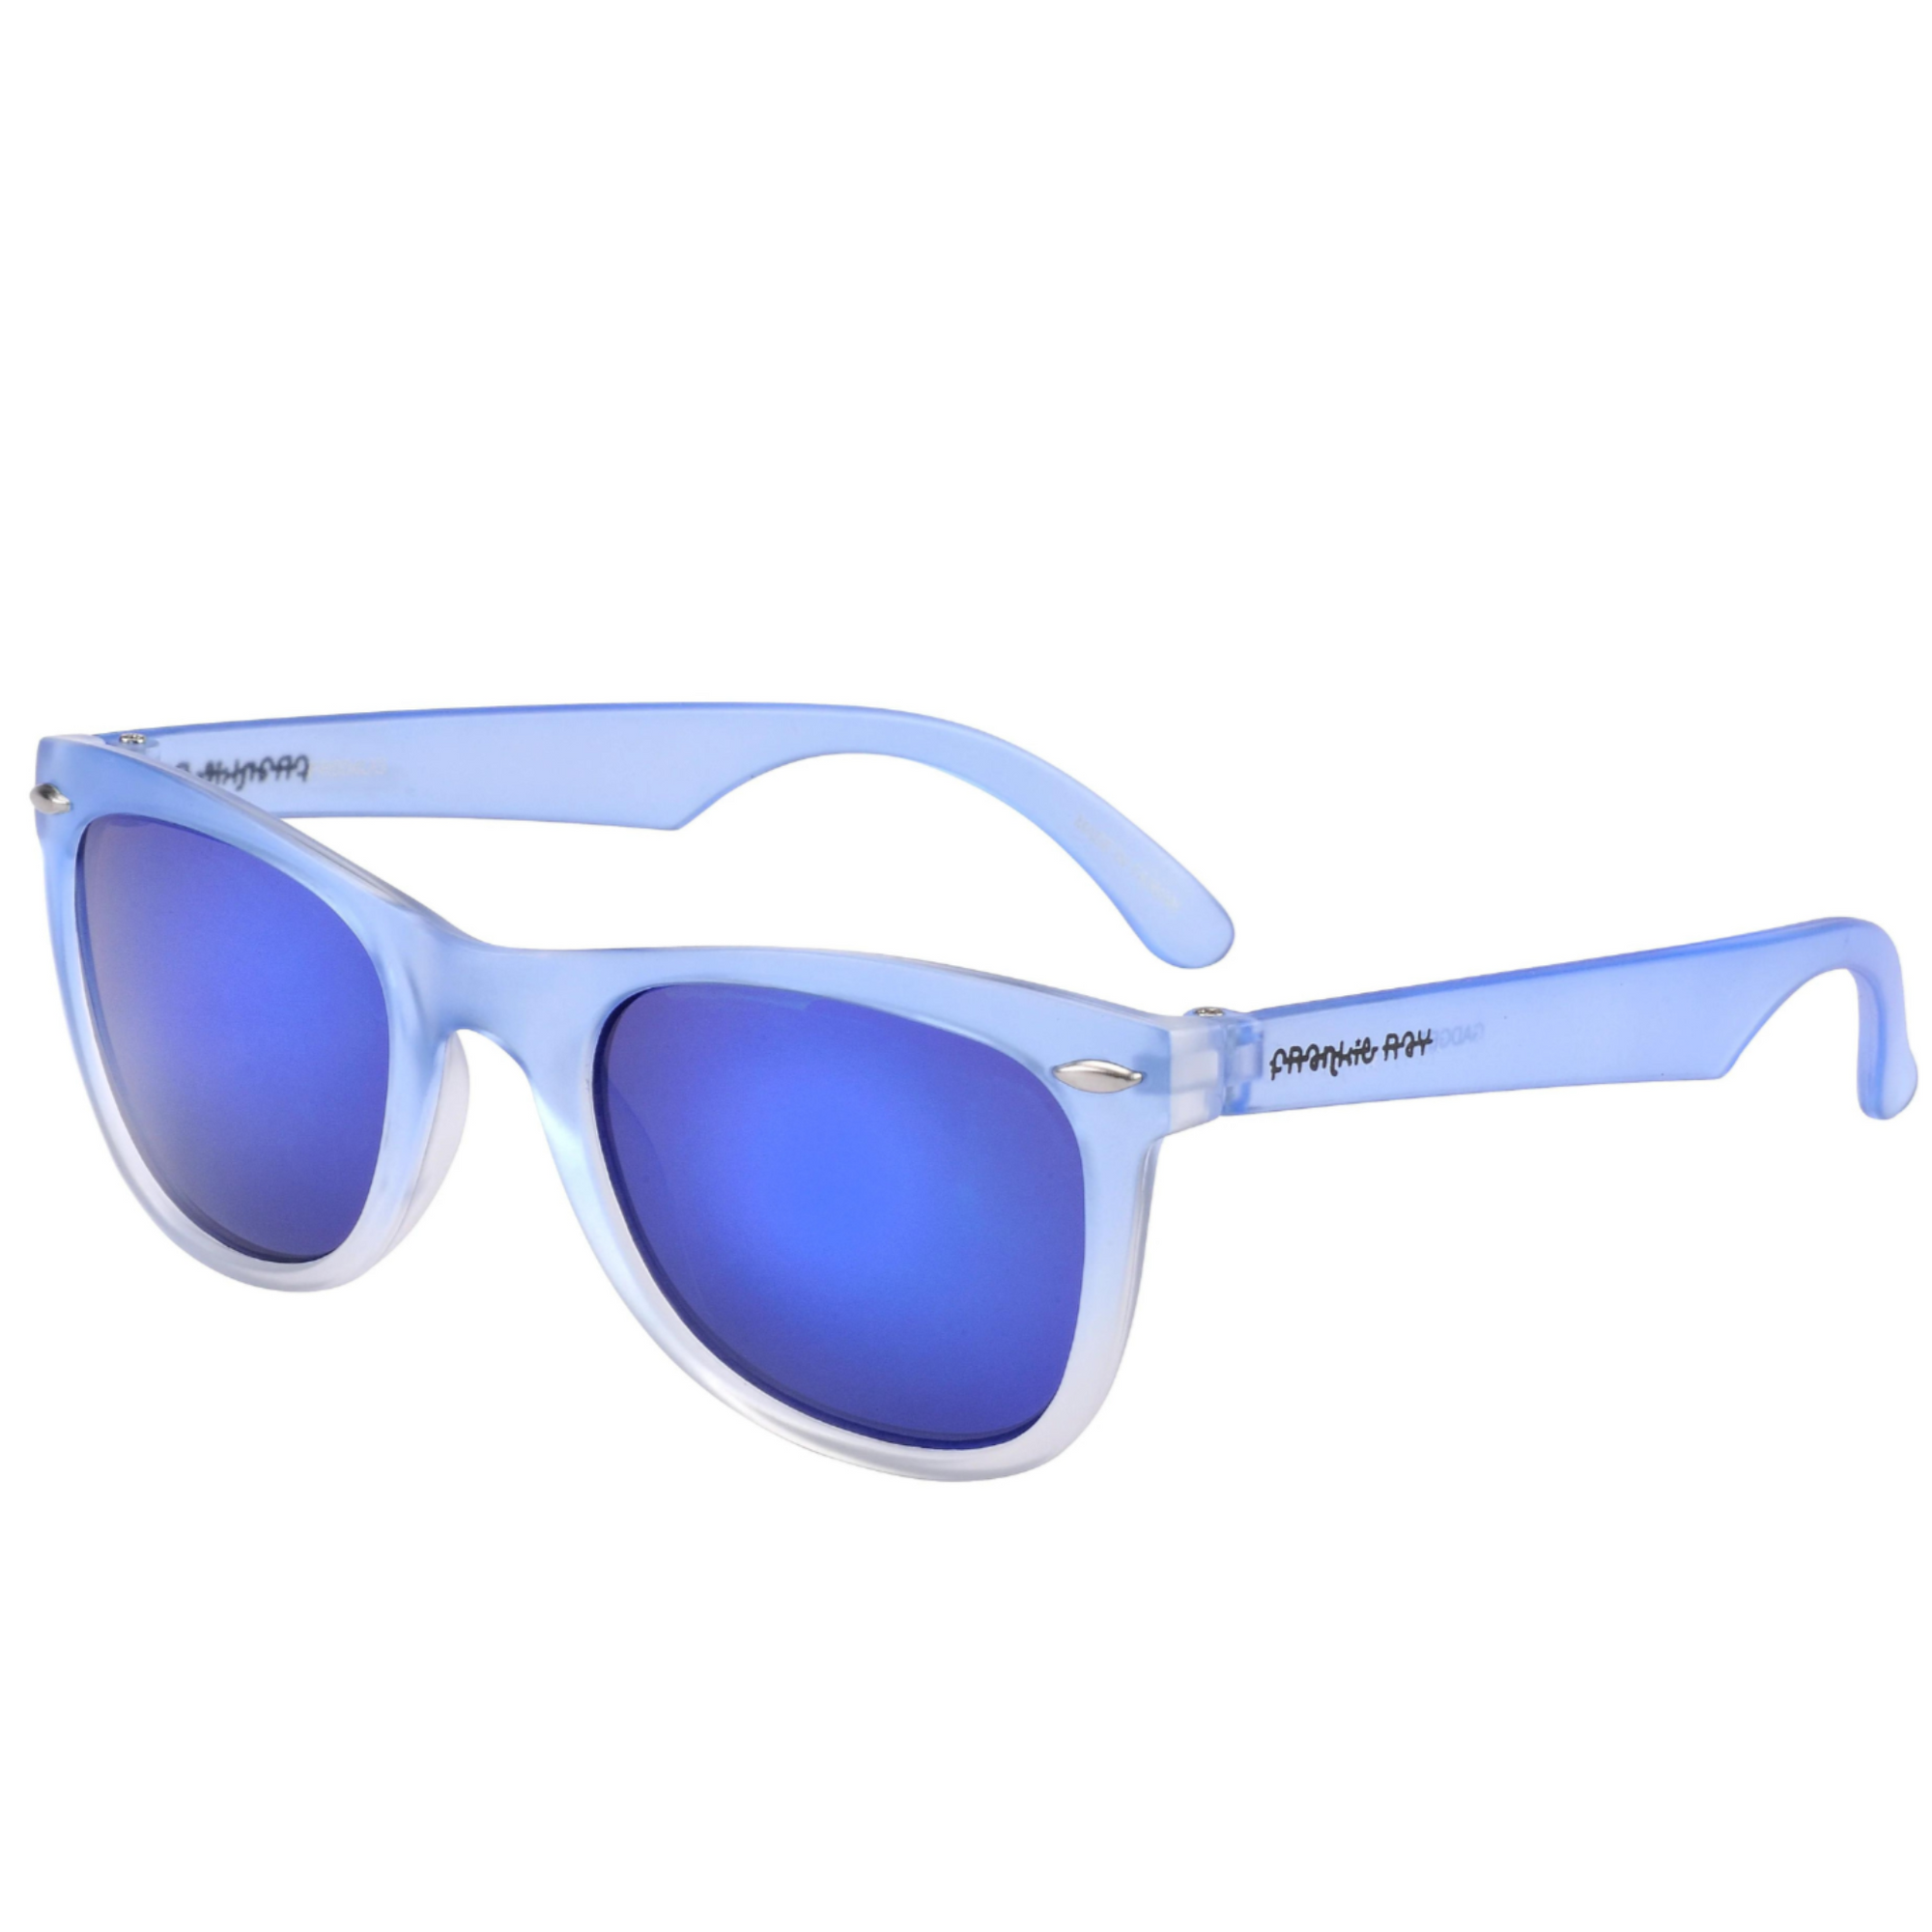 Frankie Ray Sunglasses - Gadget Blue Haze